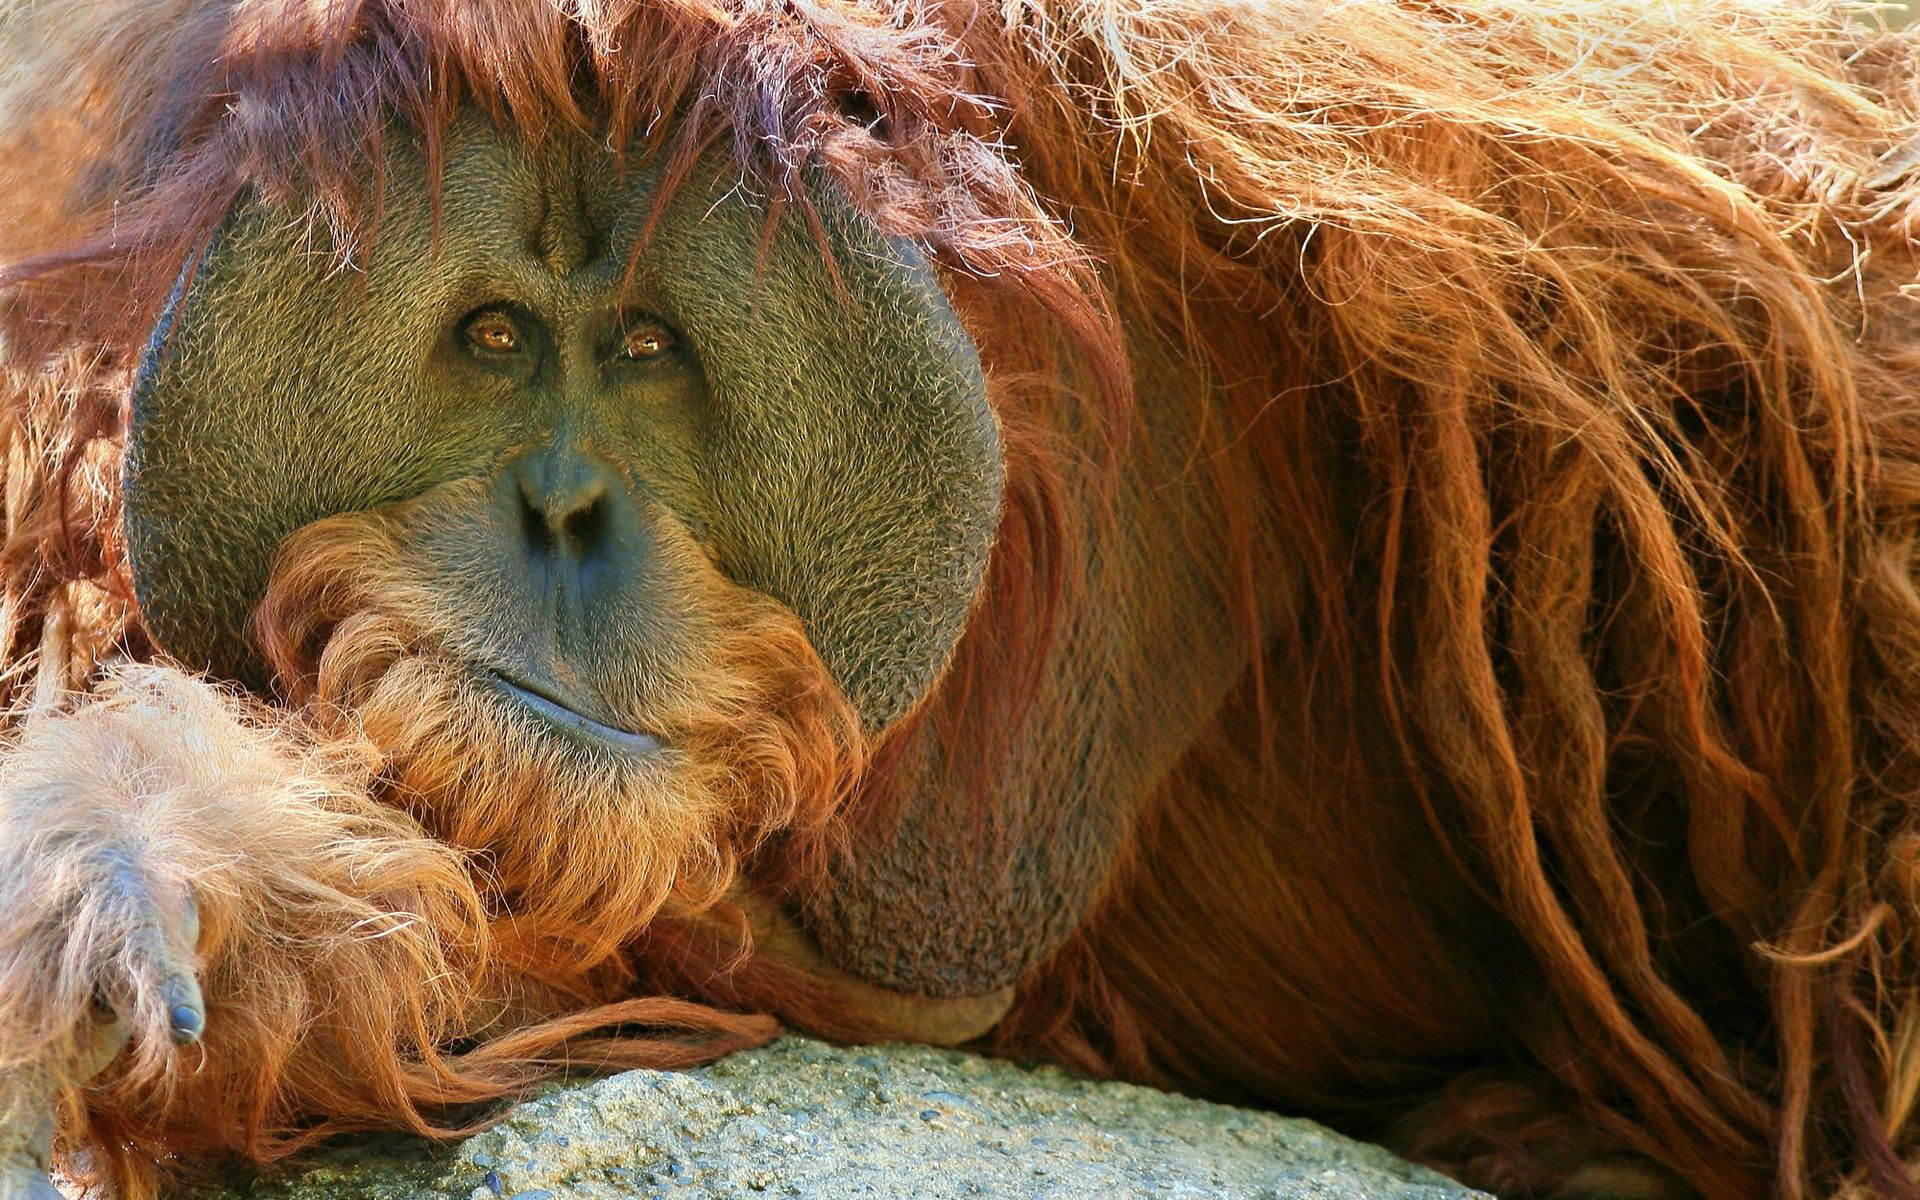 Orangutan iPhone wallpapers